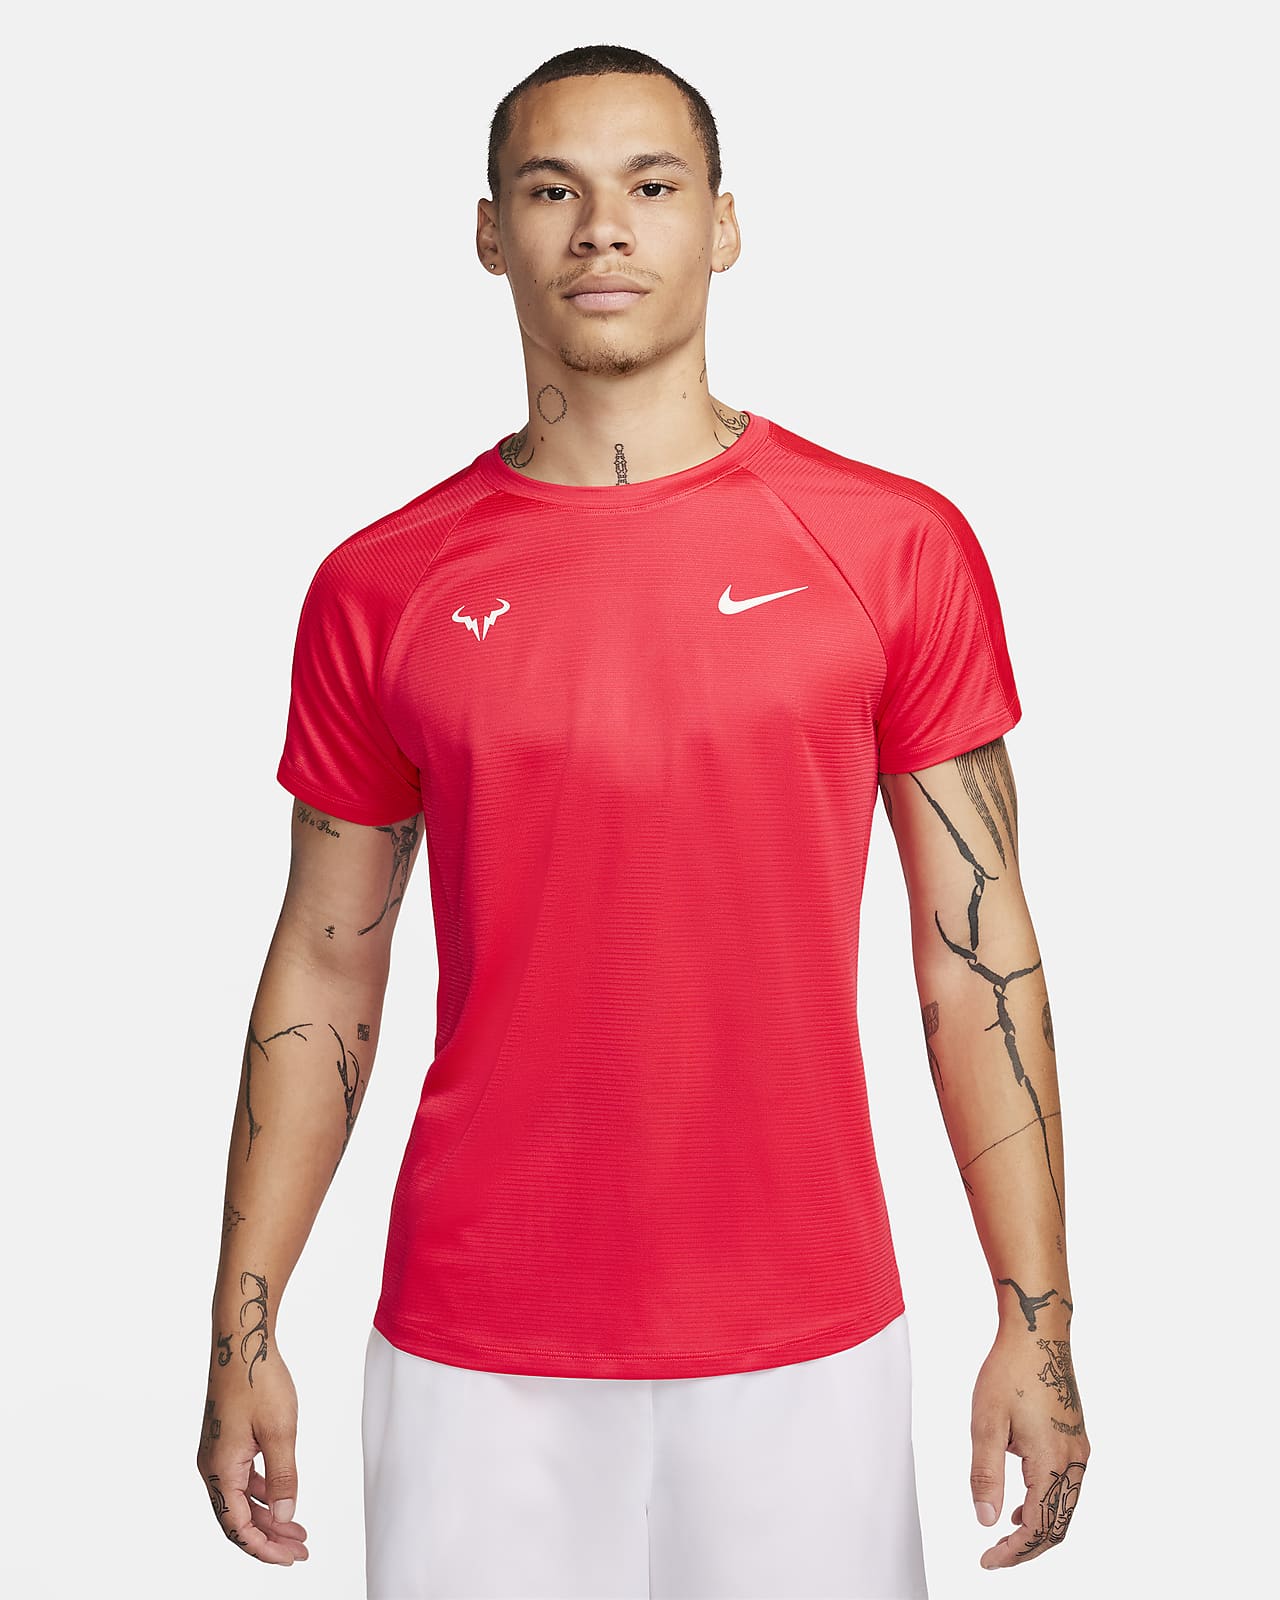 Rafa Challenger Men's Nike Dri-FIT Short-Sleeve Tennis Top. Nike LU